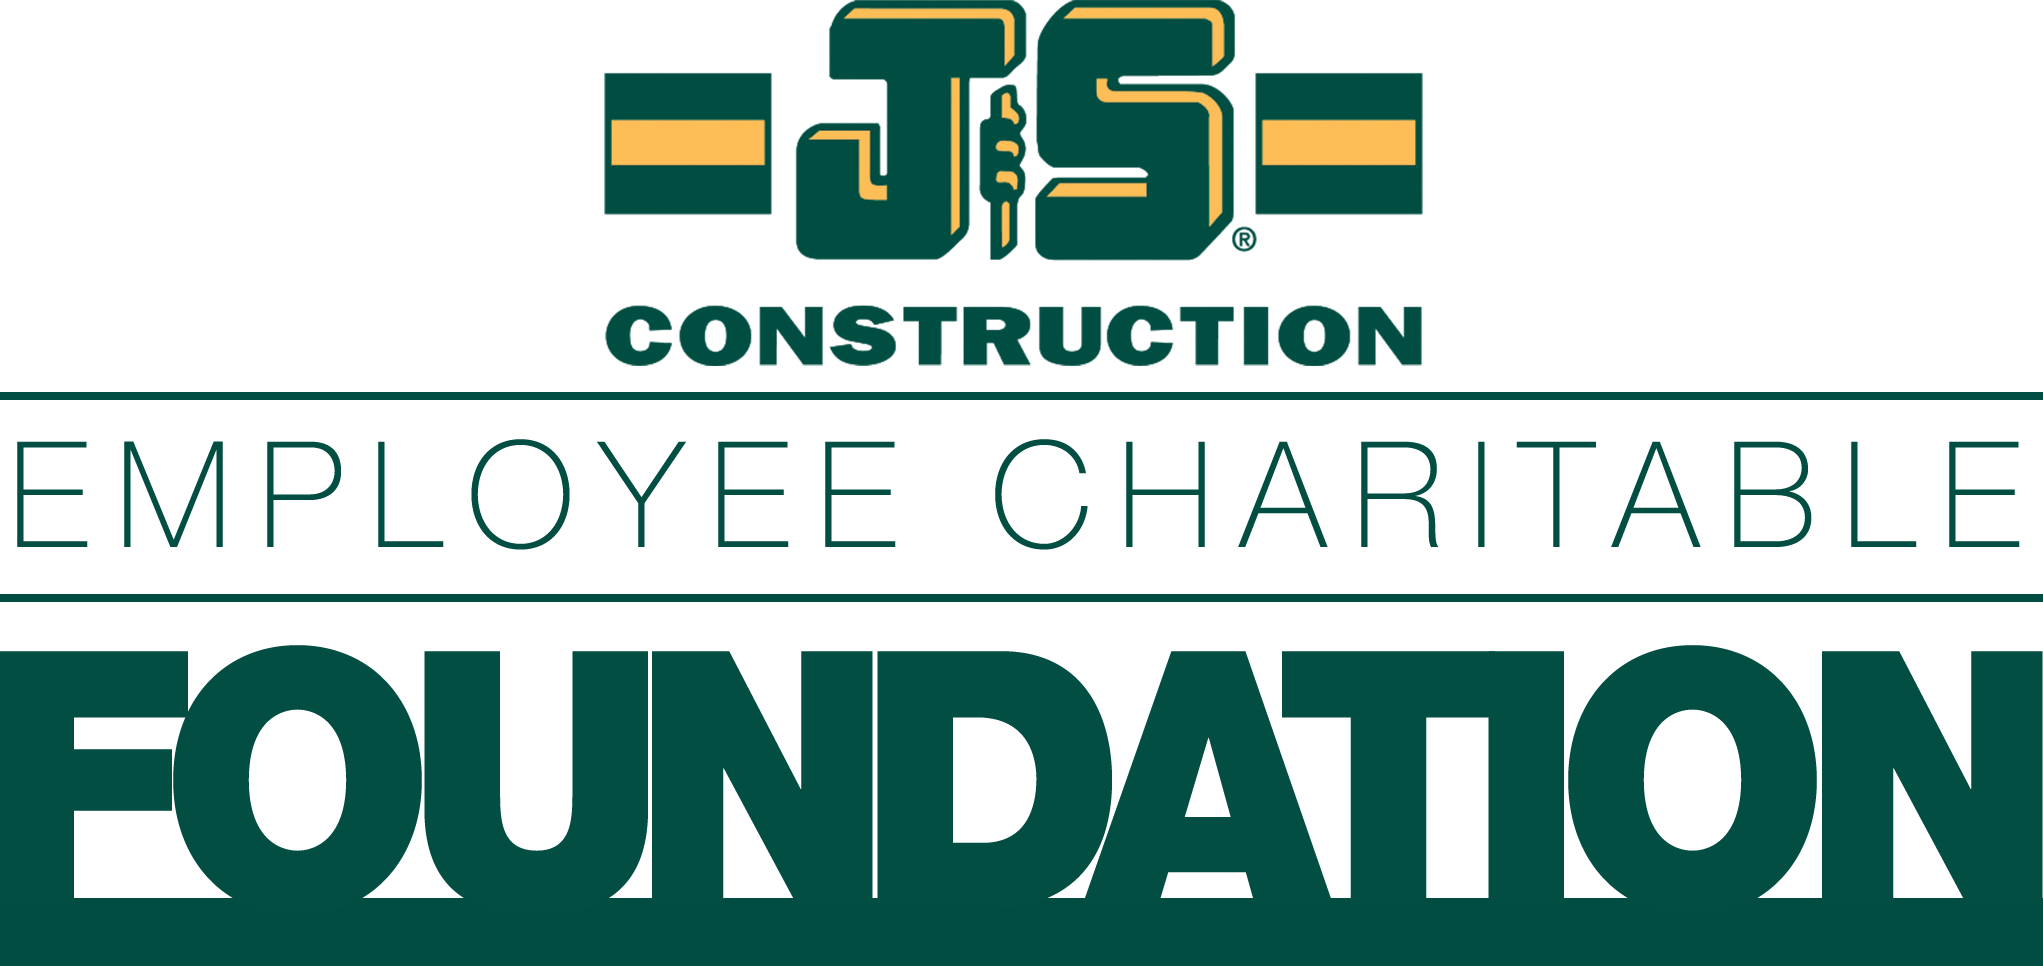 Employee Charitable Foundation -- ecf_logo_2016.png